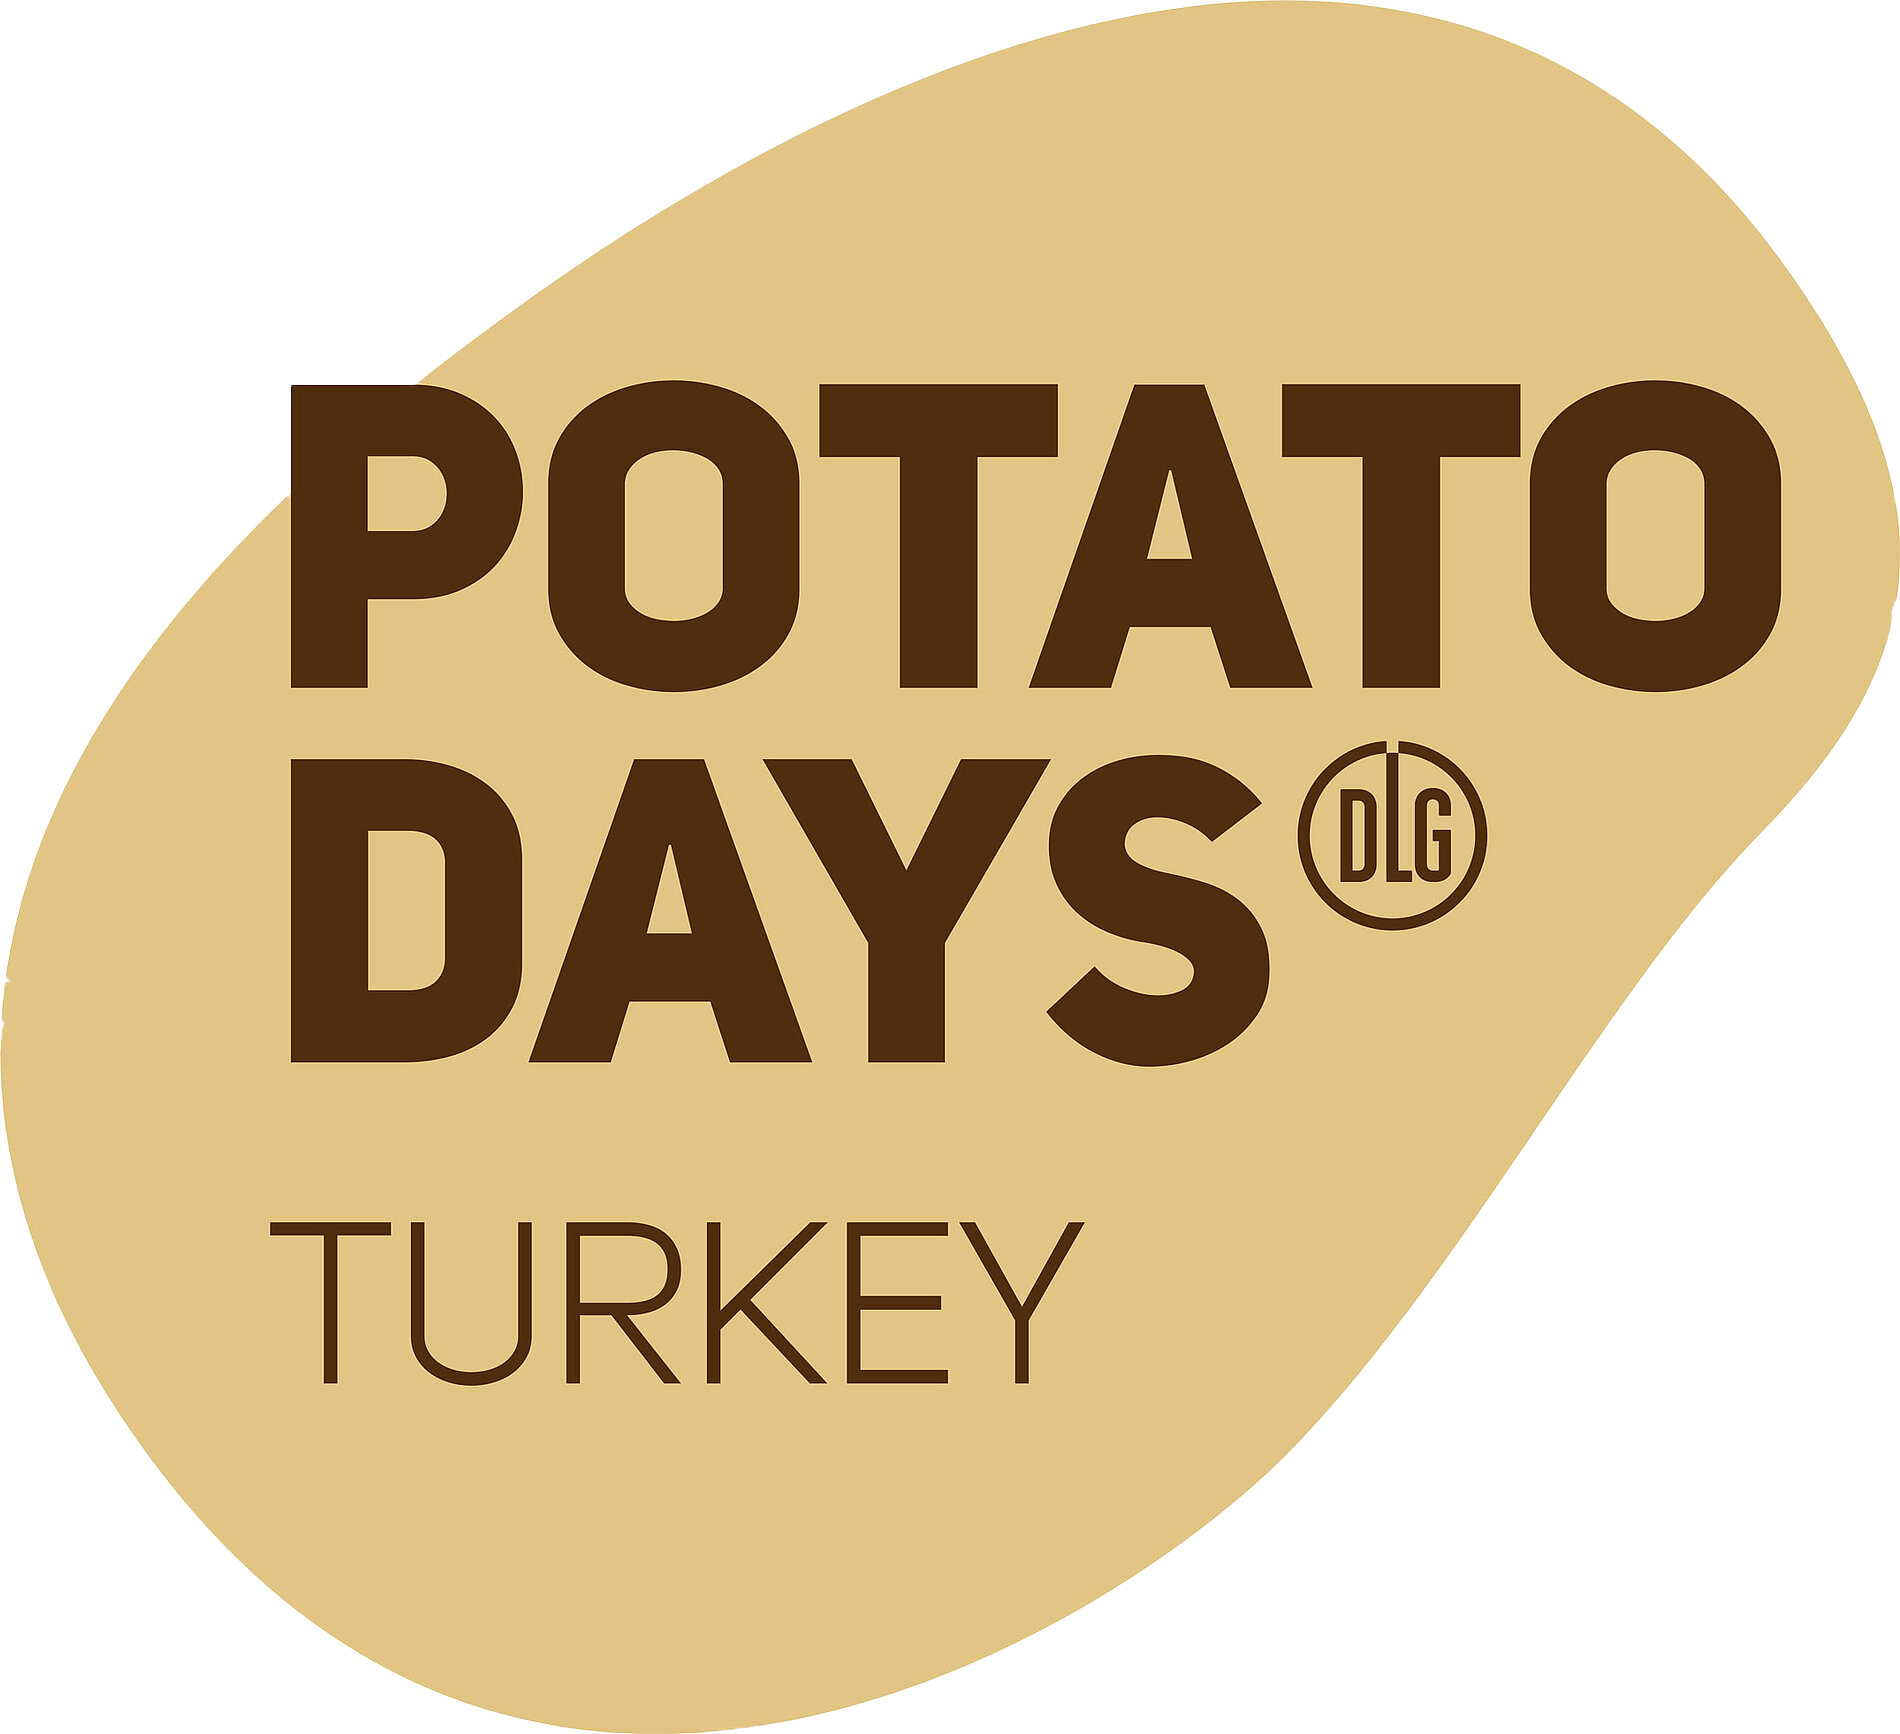 event: Potato Days UK